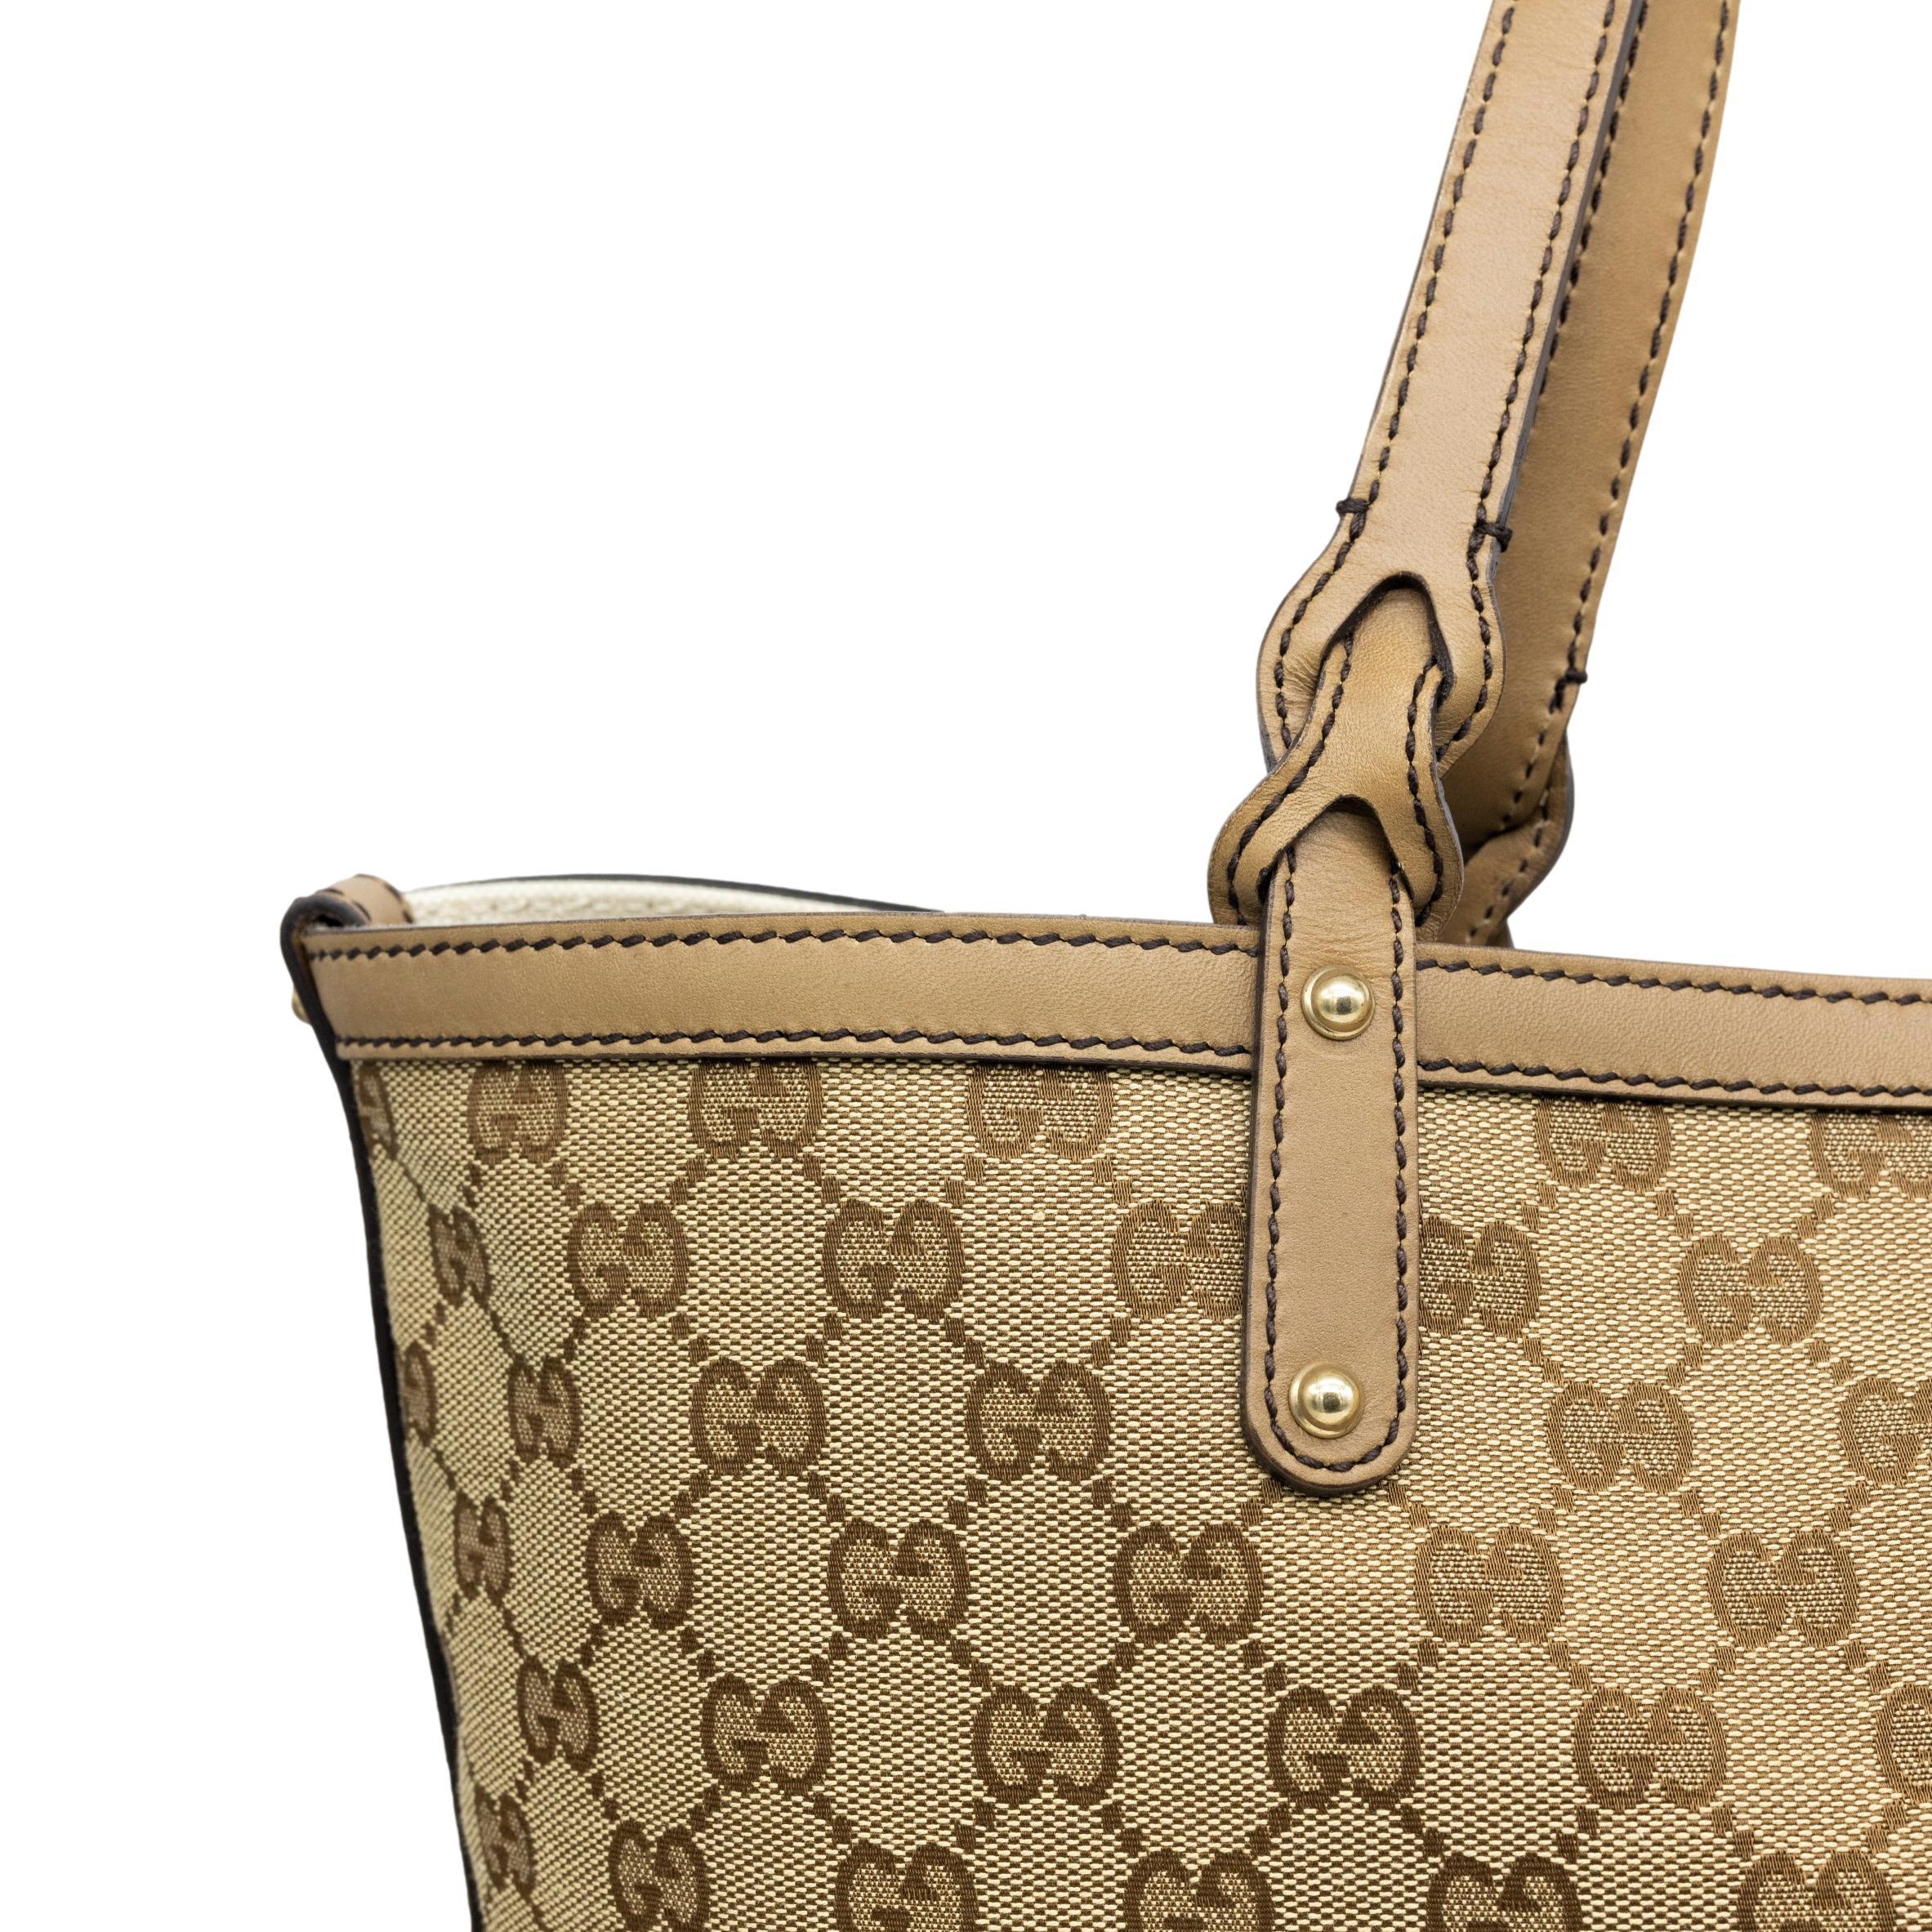 Gucci GG Monogram Supreme Canvas Tan Tote Shoulder Medium Craft Bag 2